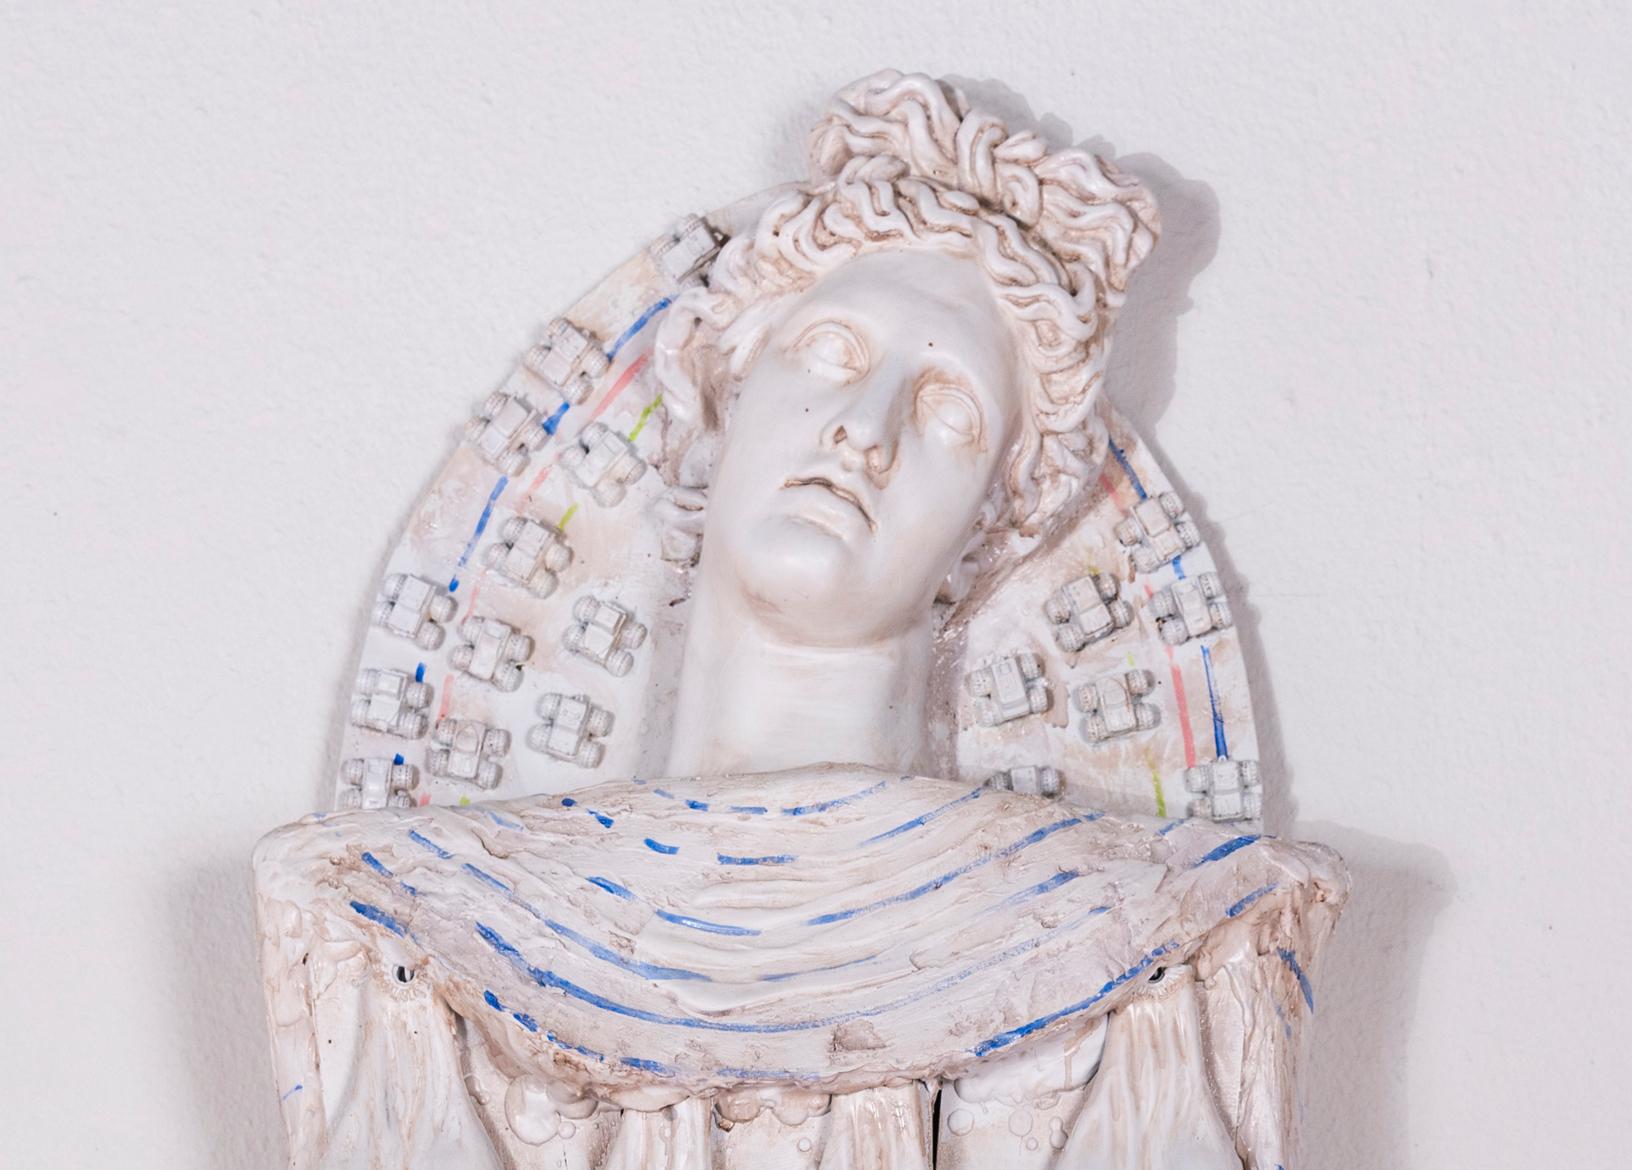 Zeitgenössische Maulwurzel, große Skulptur: „Rhoman Artemis“ – Sculpture von Joshua Goode